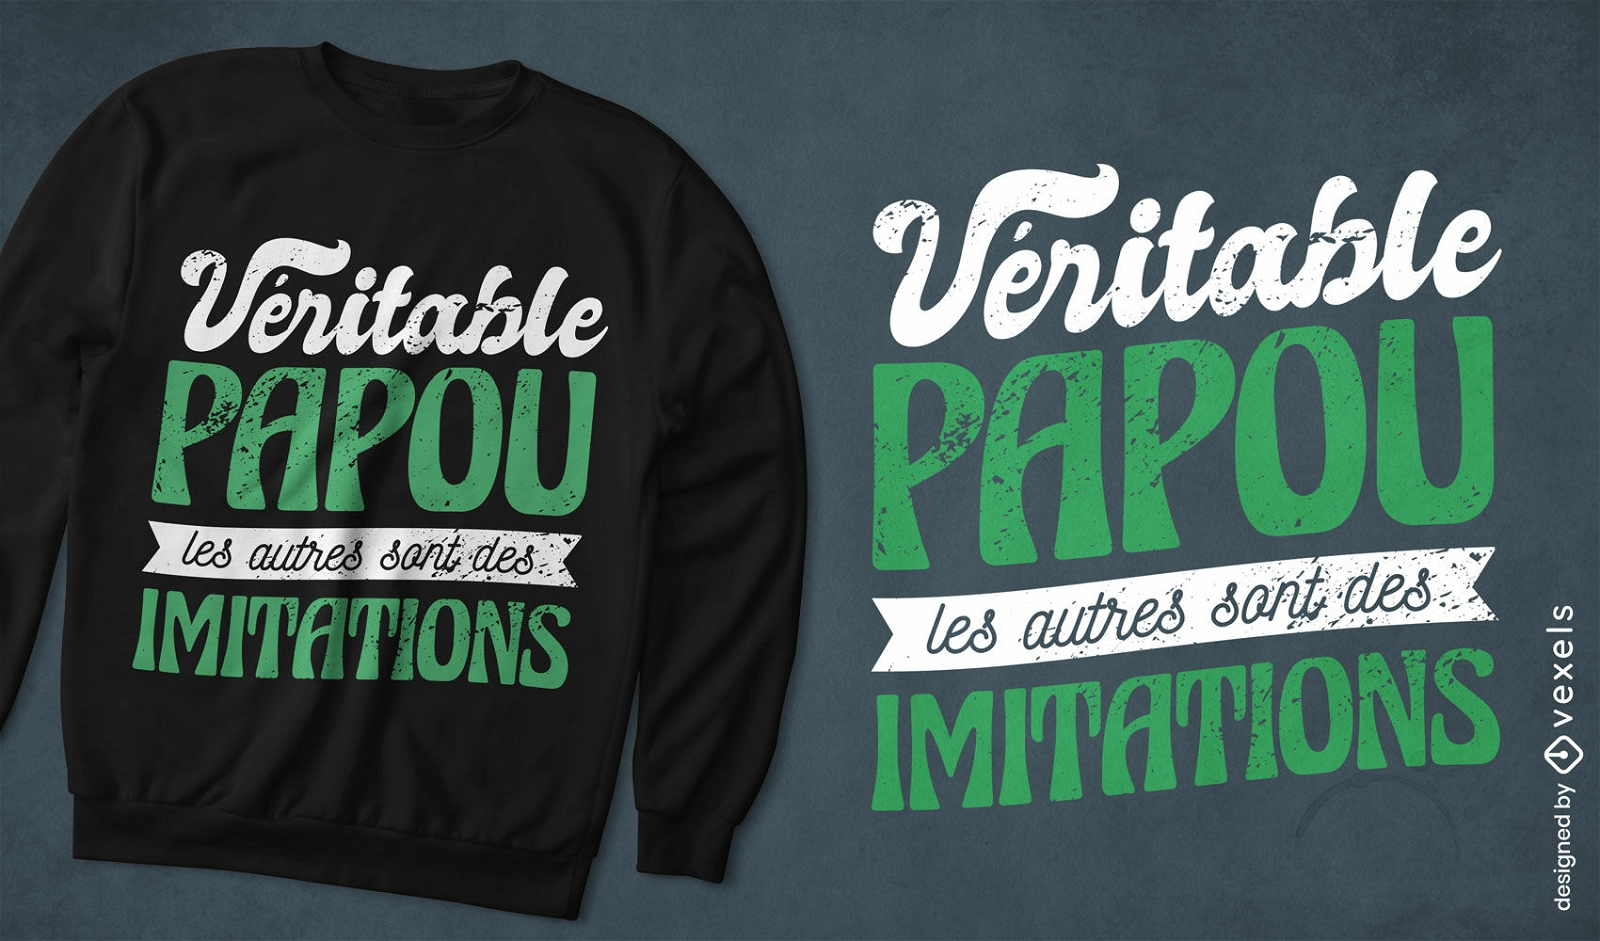 Grandpa french quote t-shirt design